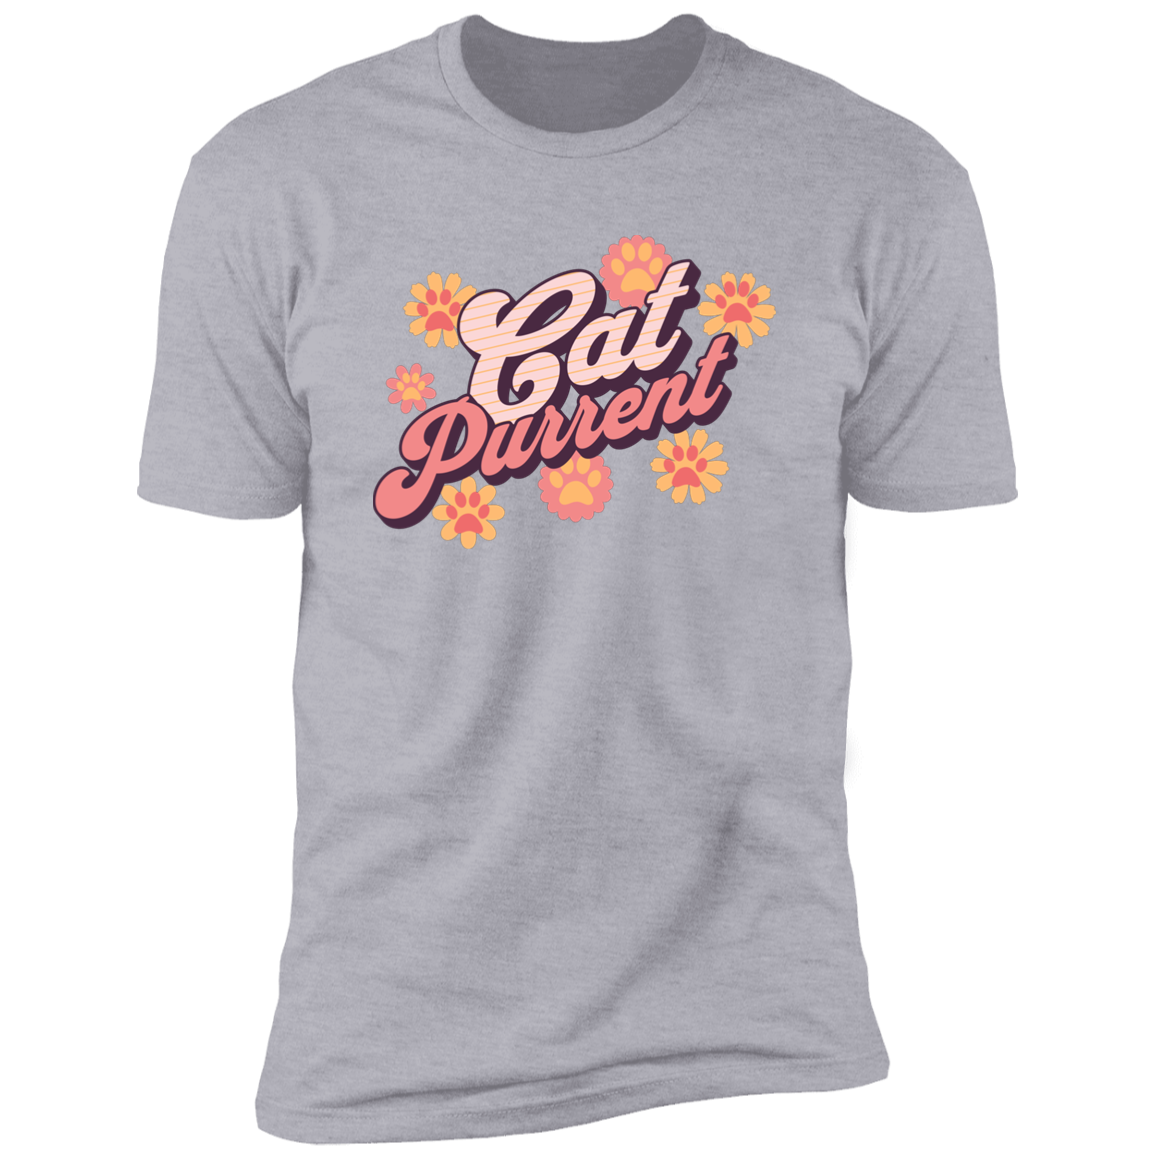 Cat Purrent Retro T-shirt, Cat Parent Shirt for humans, in light heather gray